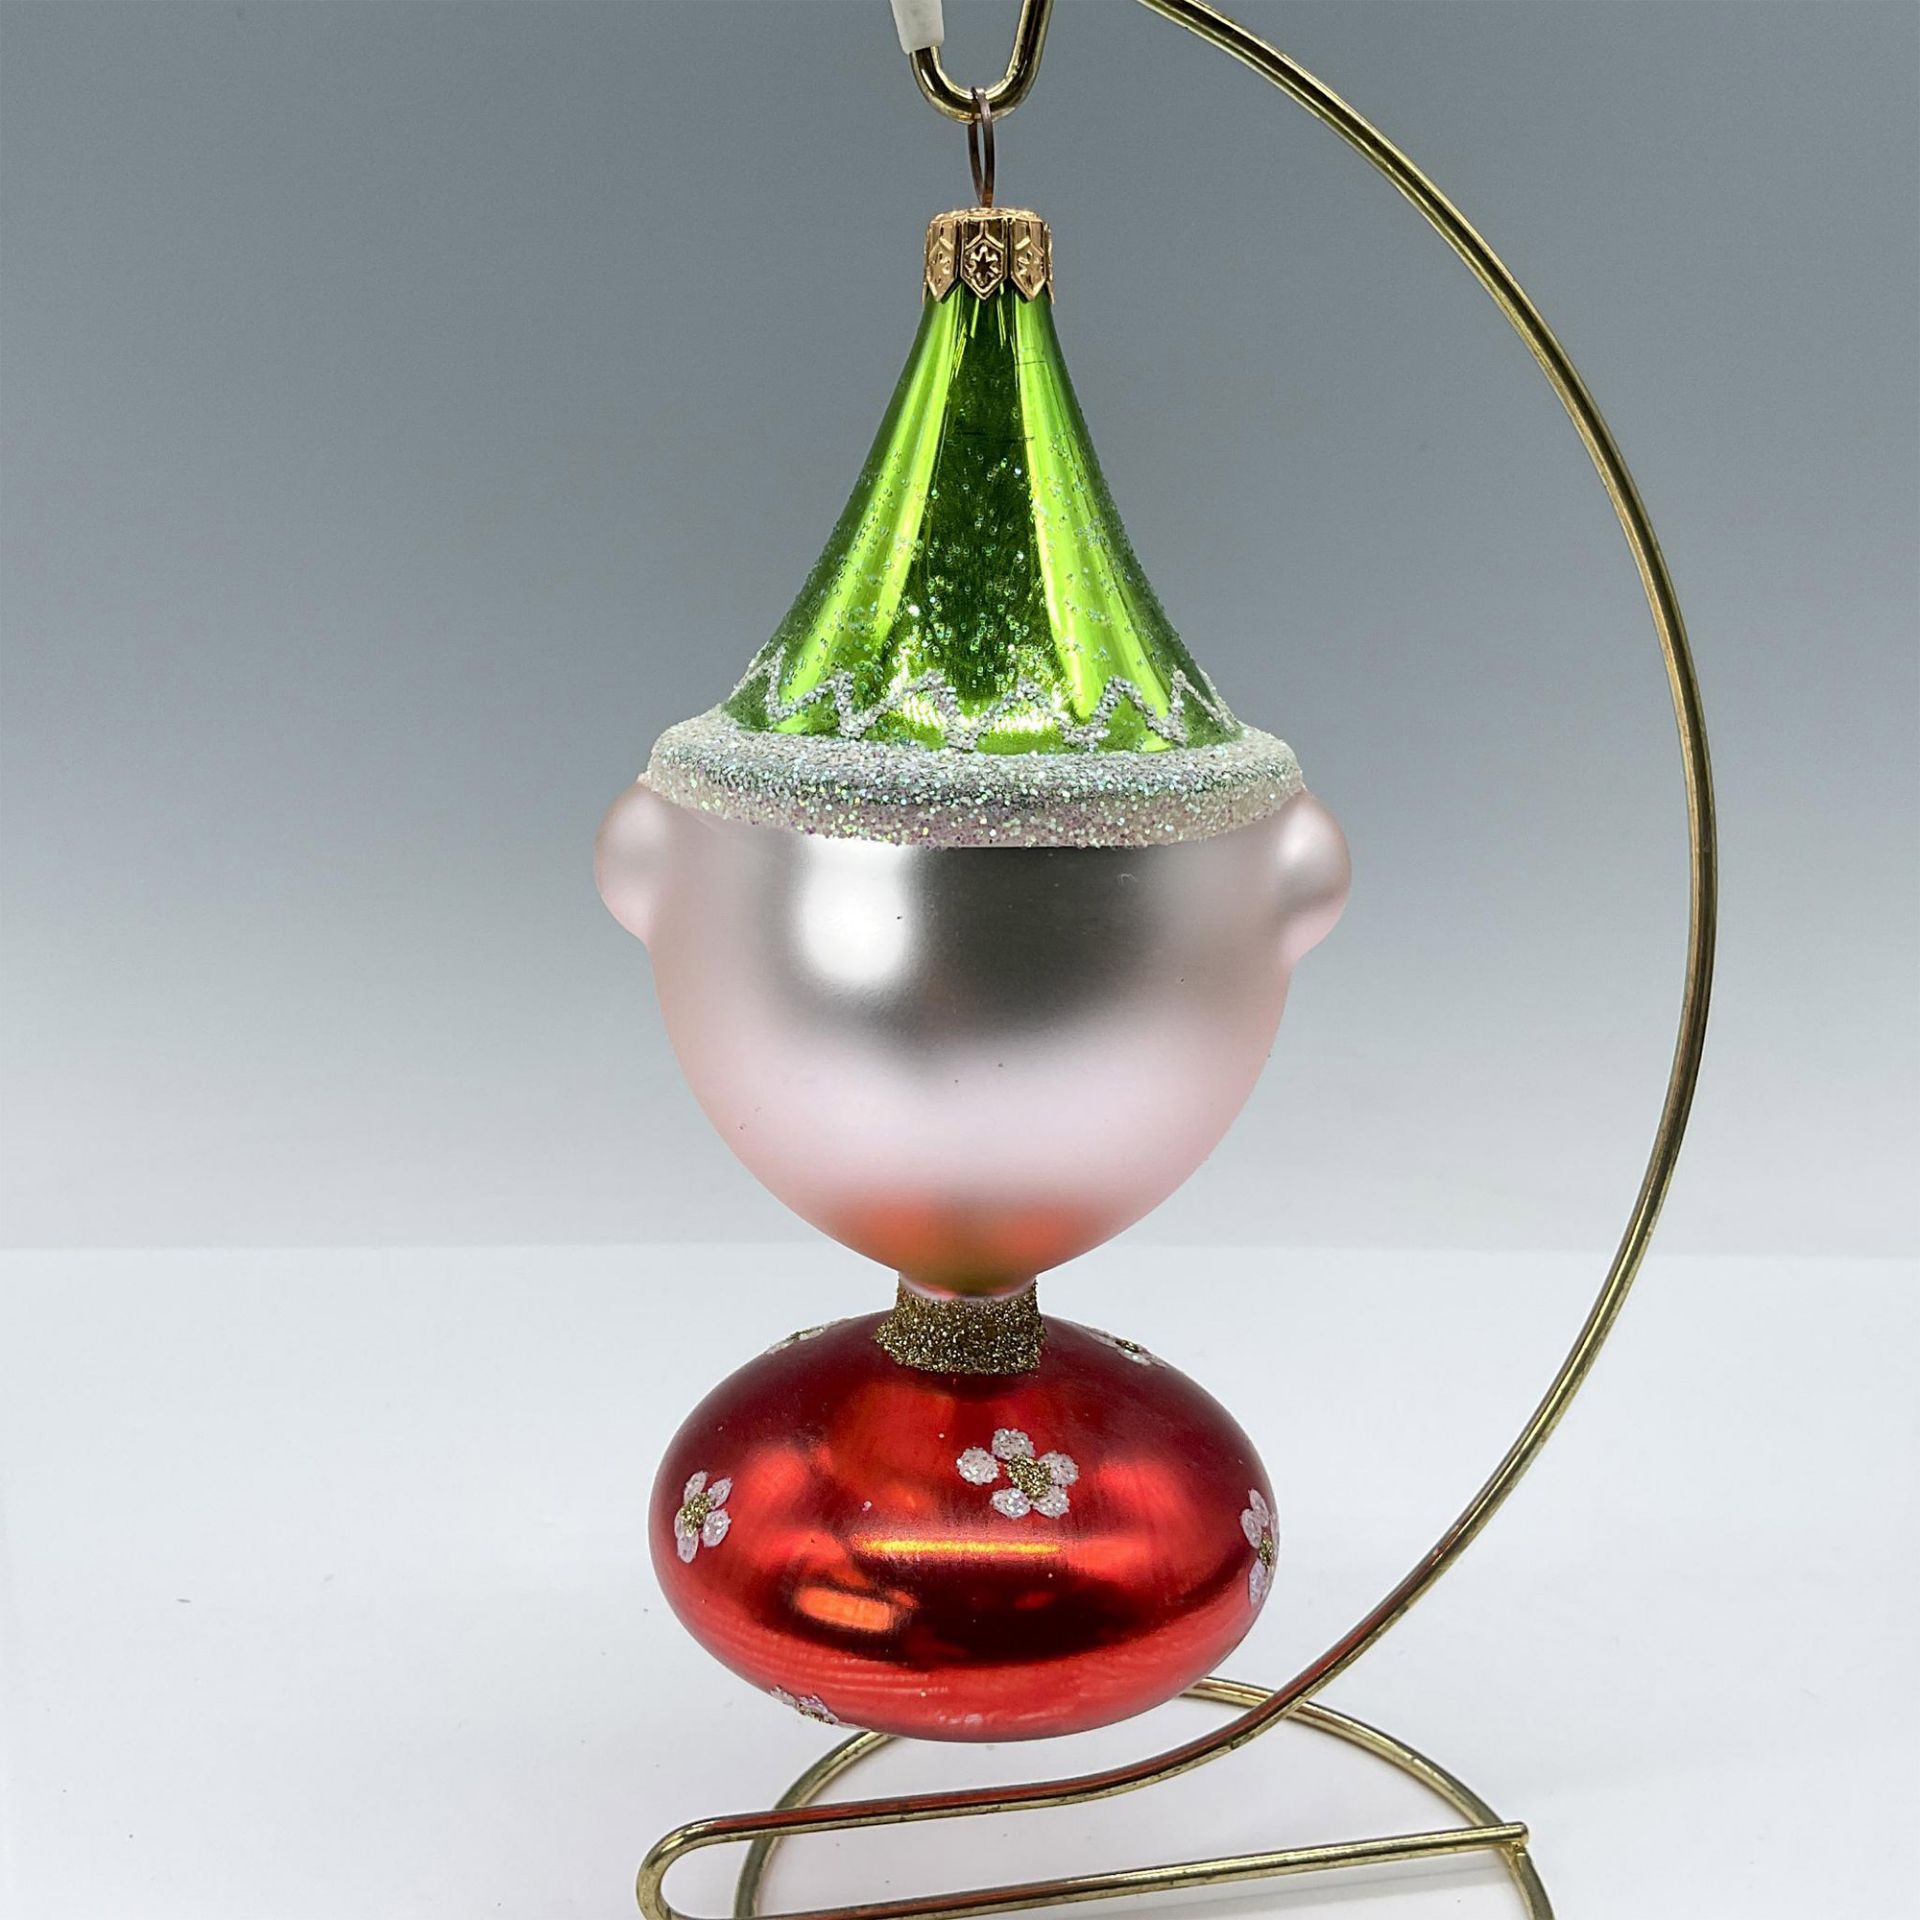 Christopher Radko Italian Blown Glass Ornament, Pinocchio - Image 2 of 3